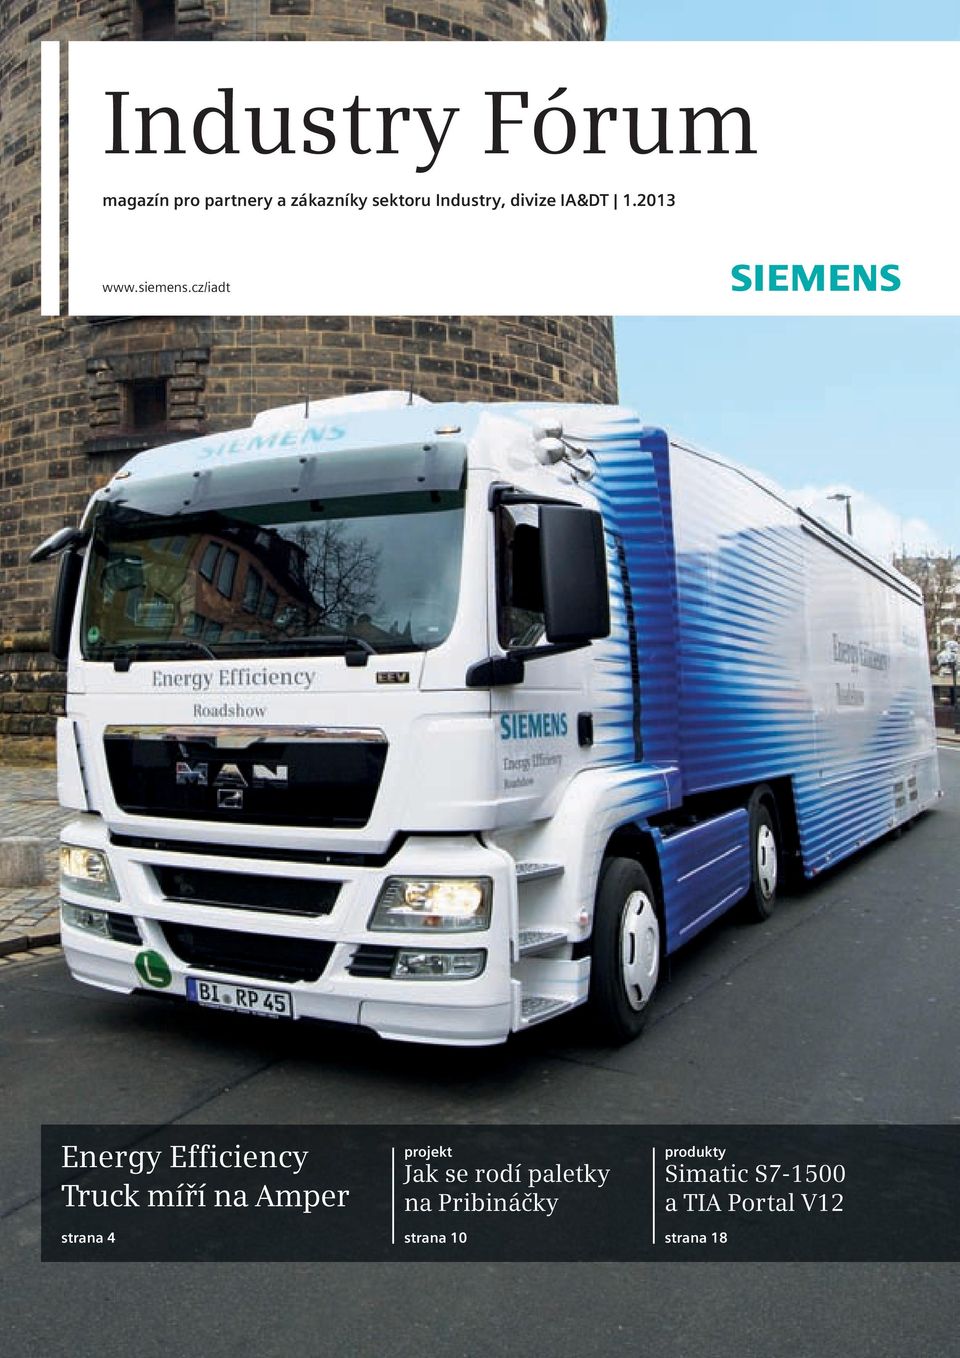 cz/iadt Energy Efficiency Truck míří na Amper strana 4 projekt